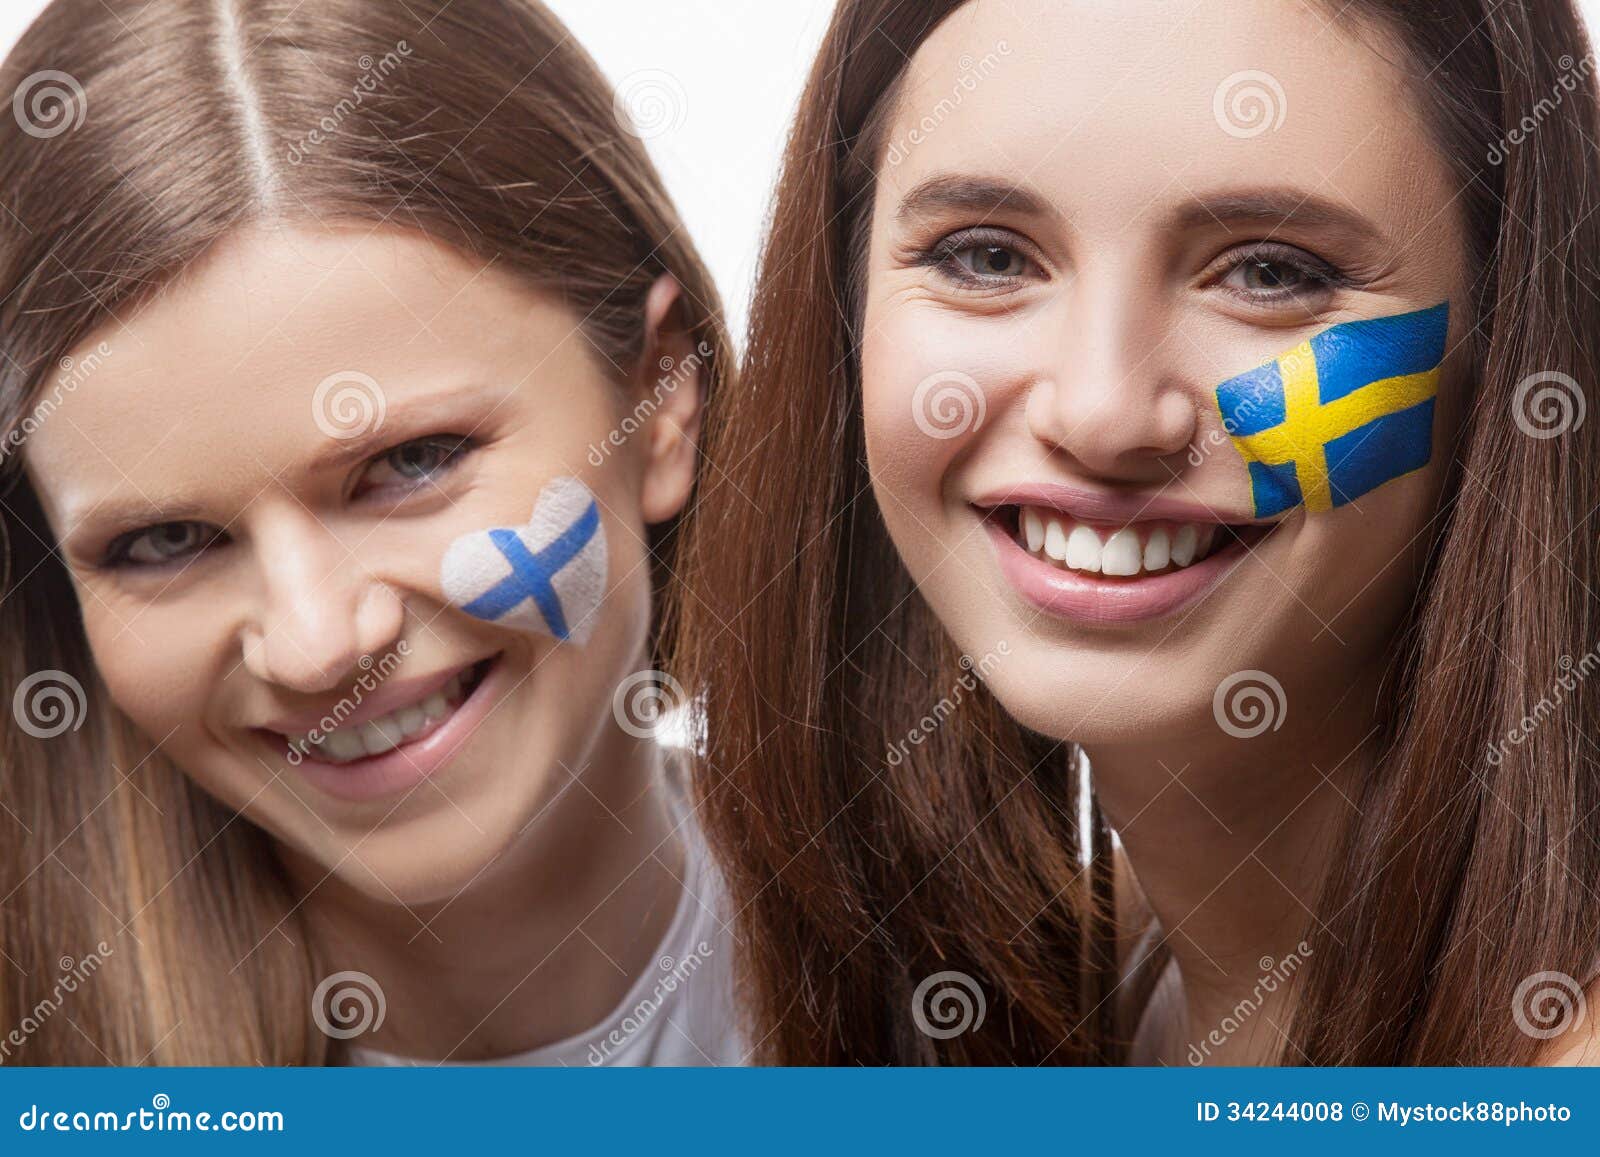 Swedish teen pics free